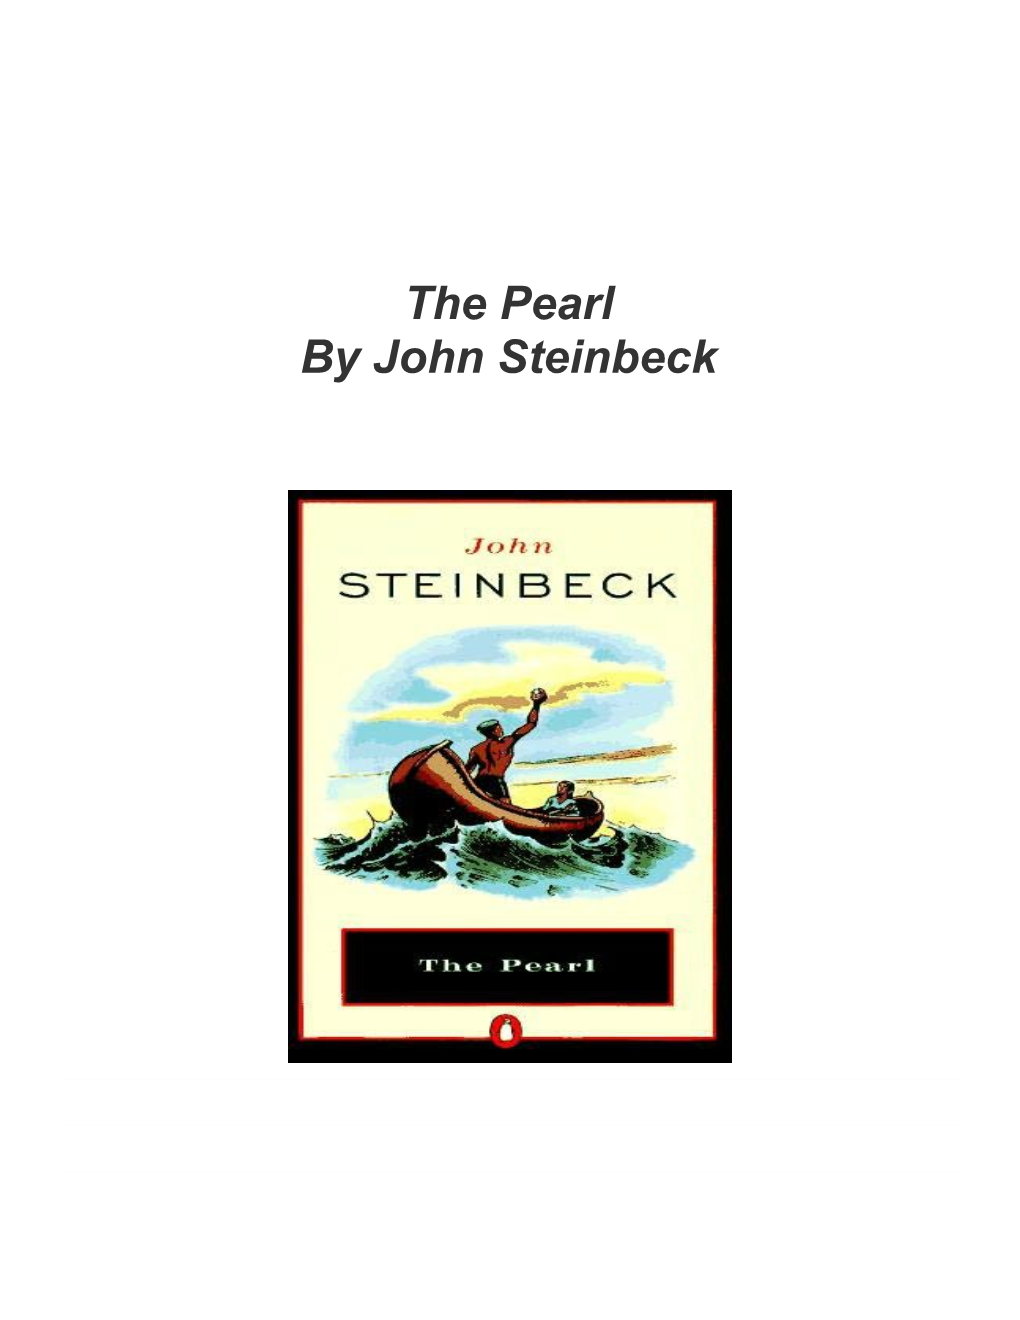 By John Steinbeck